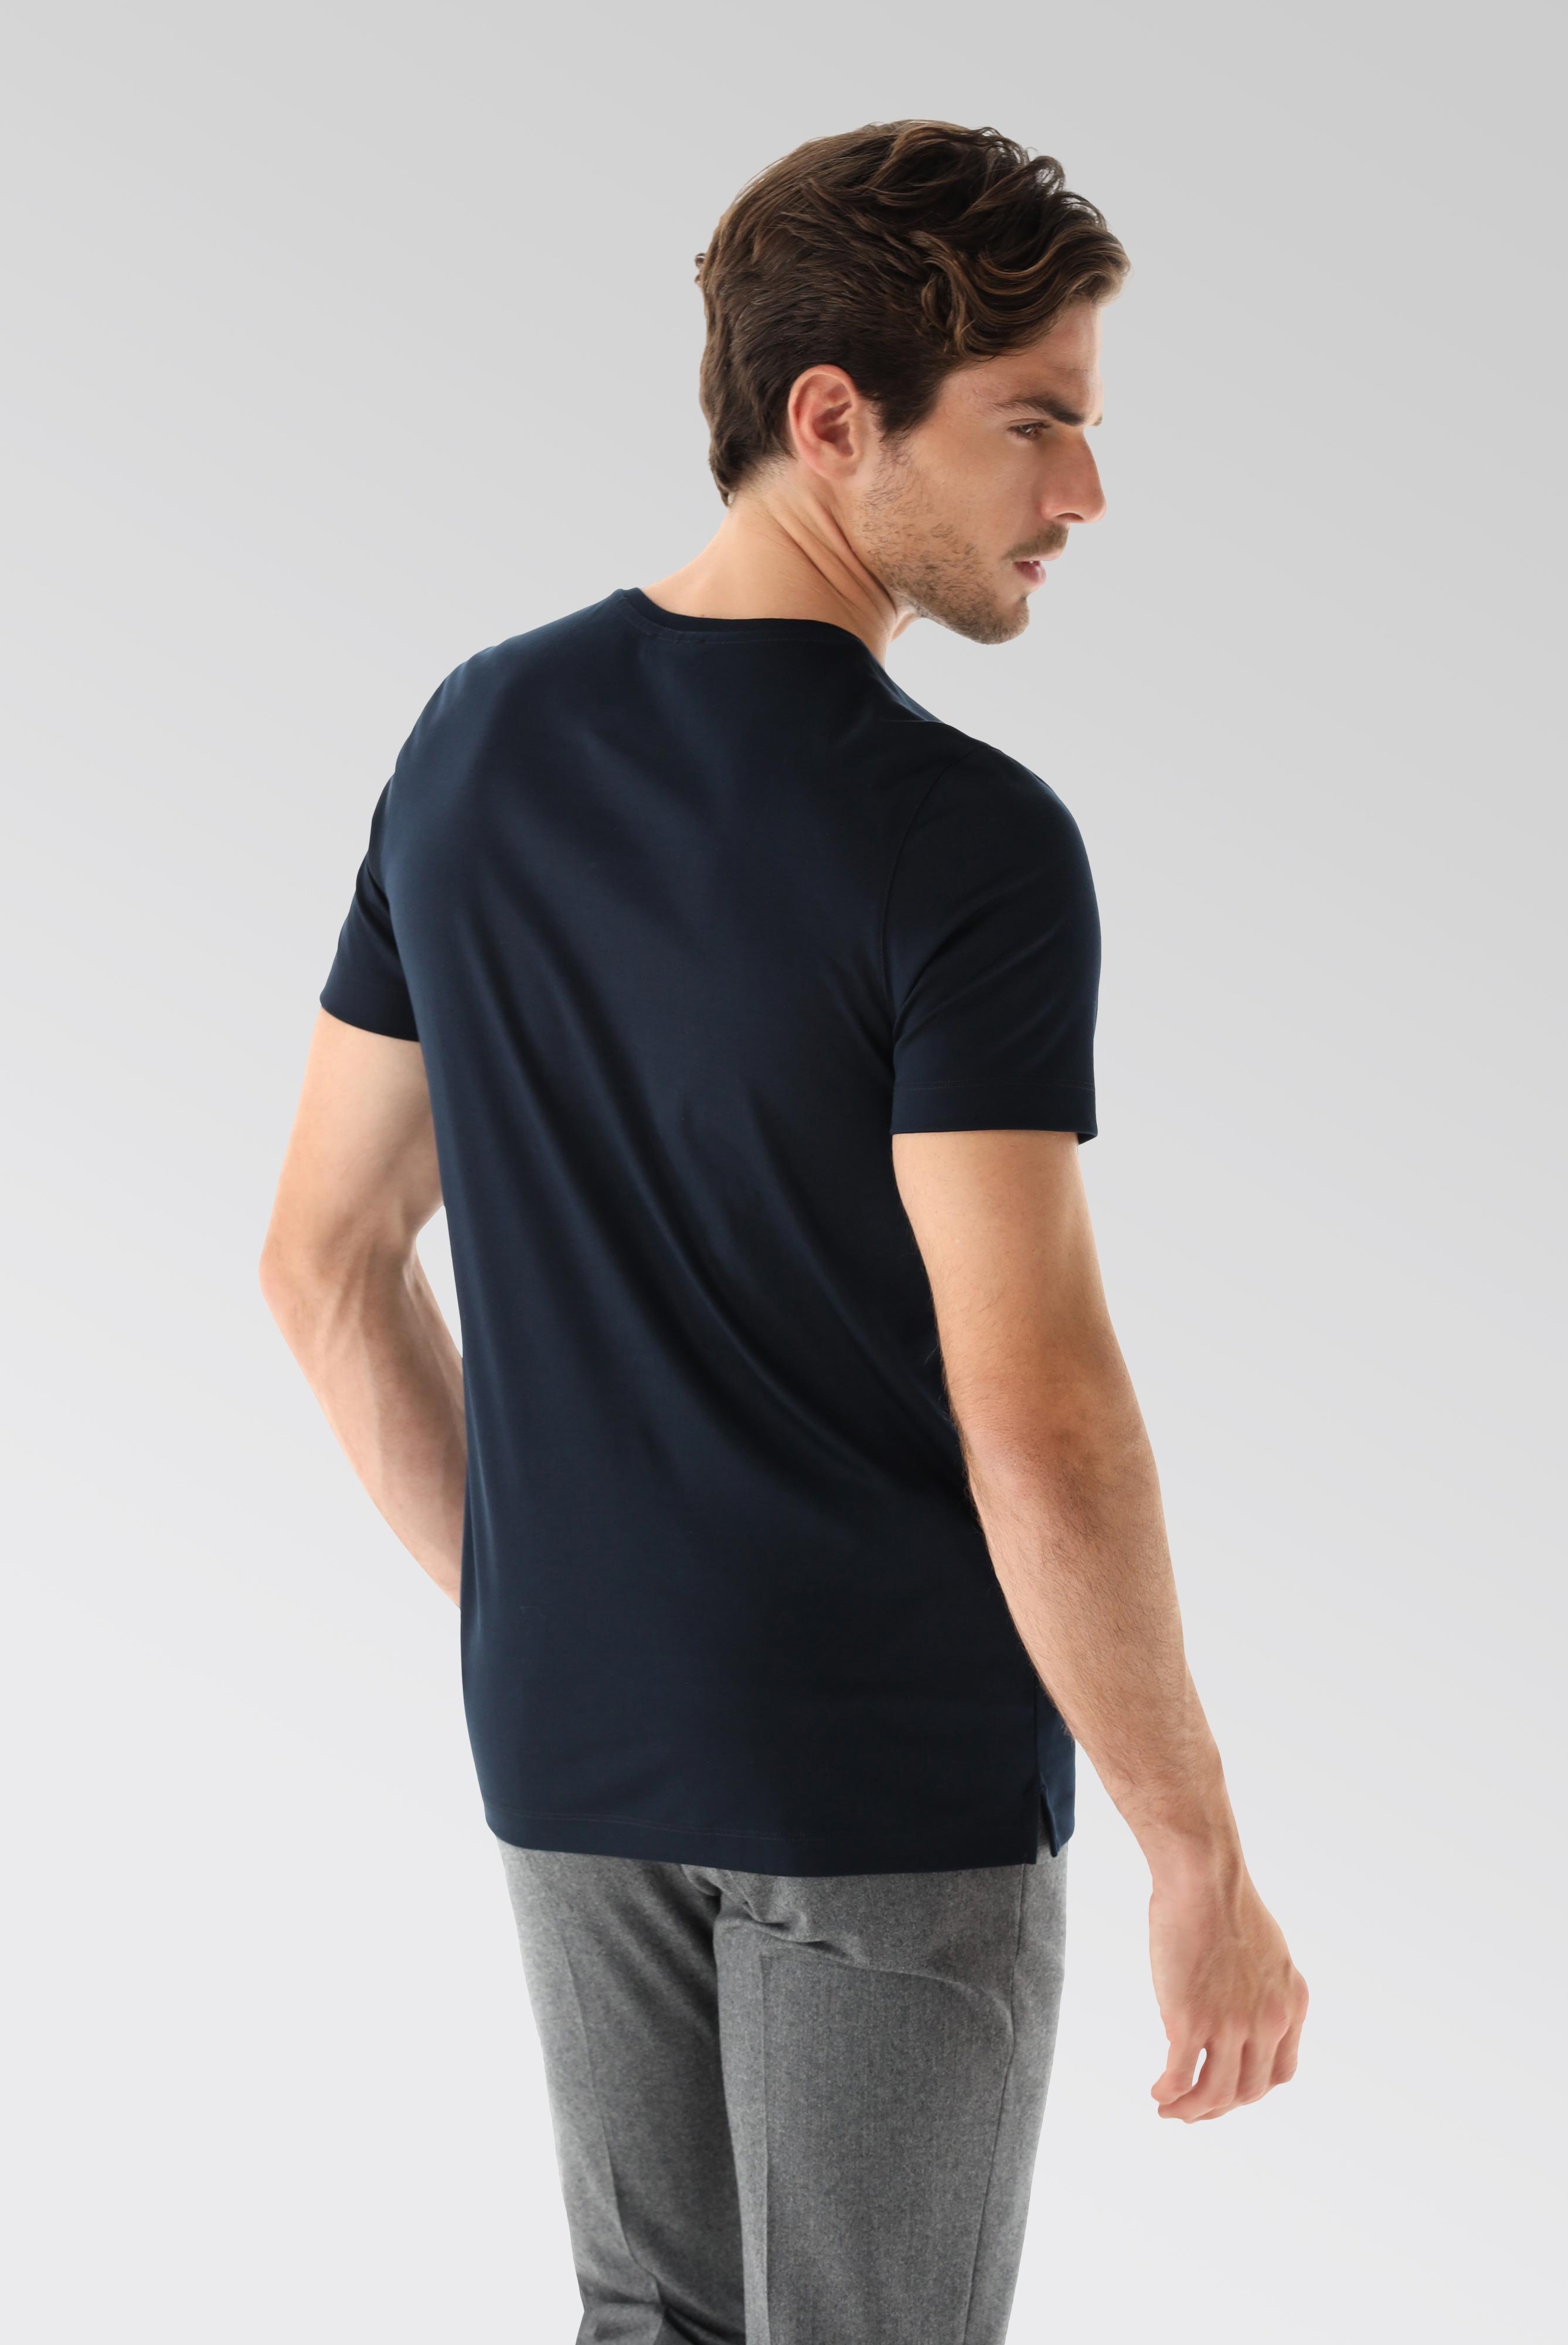 T-Shirts+Swiss Cotton Jersey V-Neck T-Shirt+20.1715.UX.180031.790.S